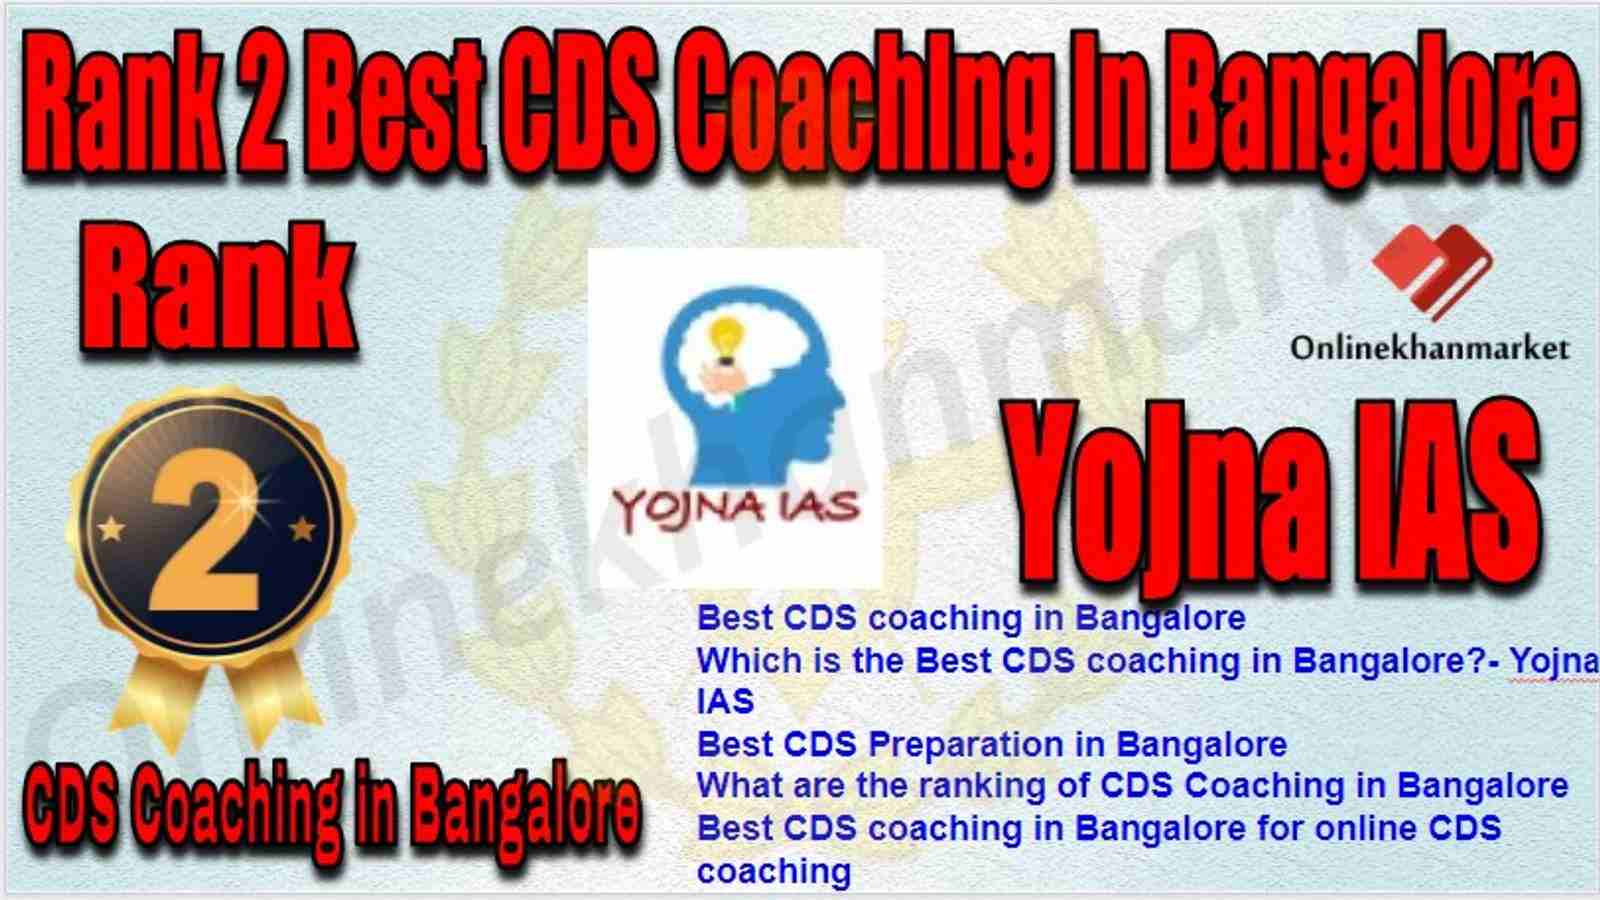 Rank 2 Best CDS Coaching in bangalore